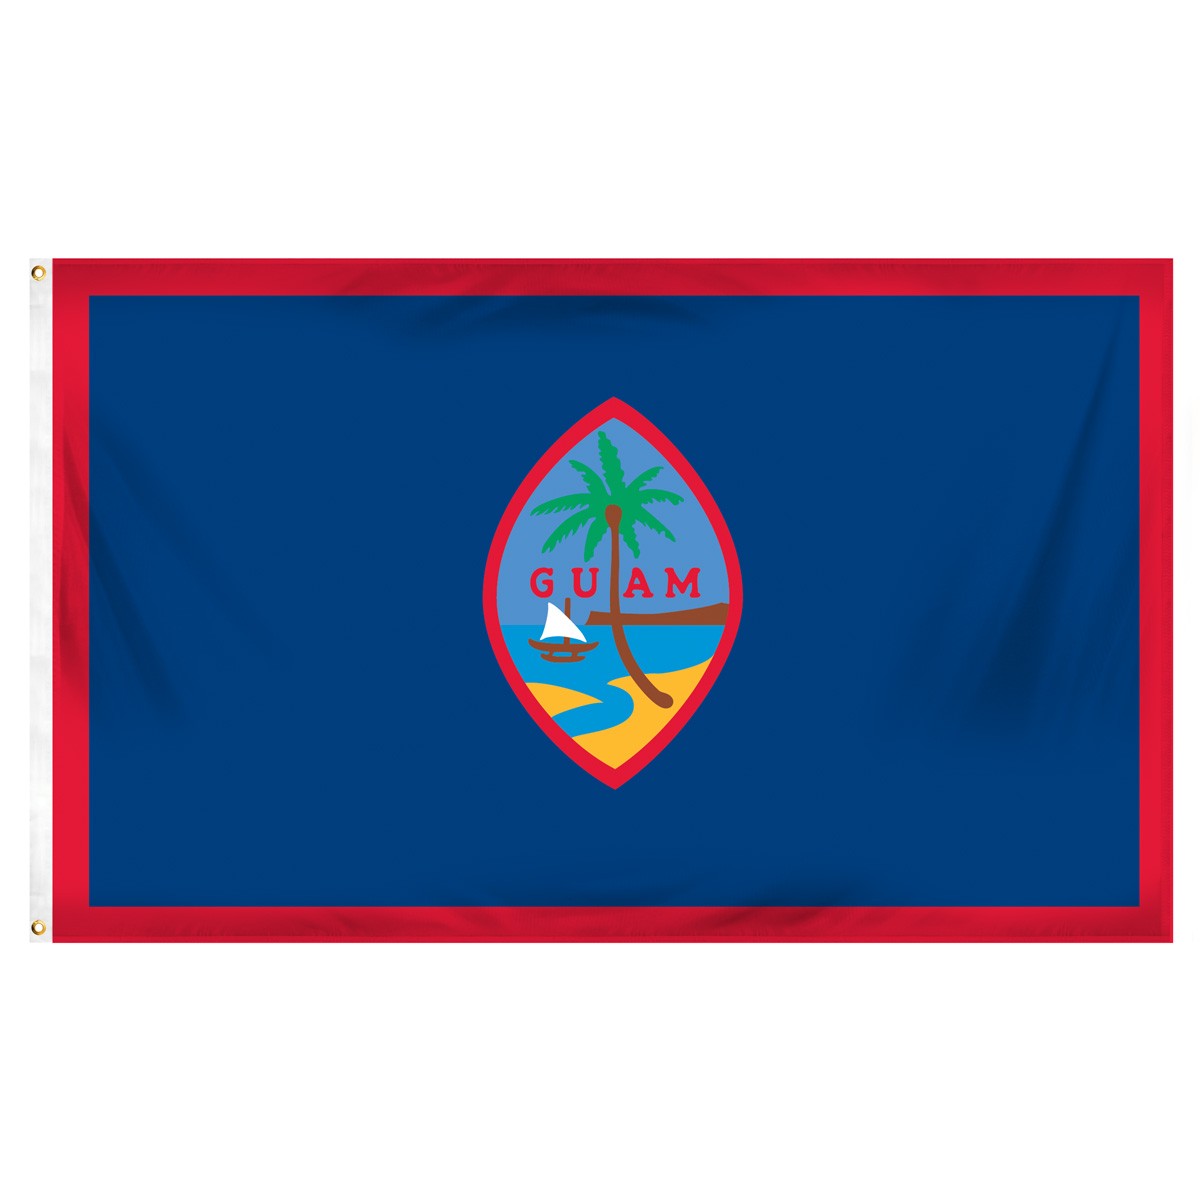 Guam Fringed Presentation Flags